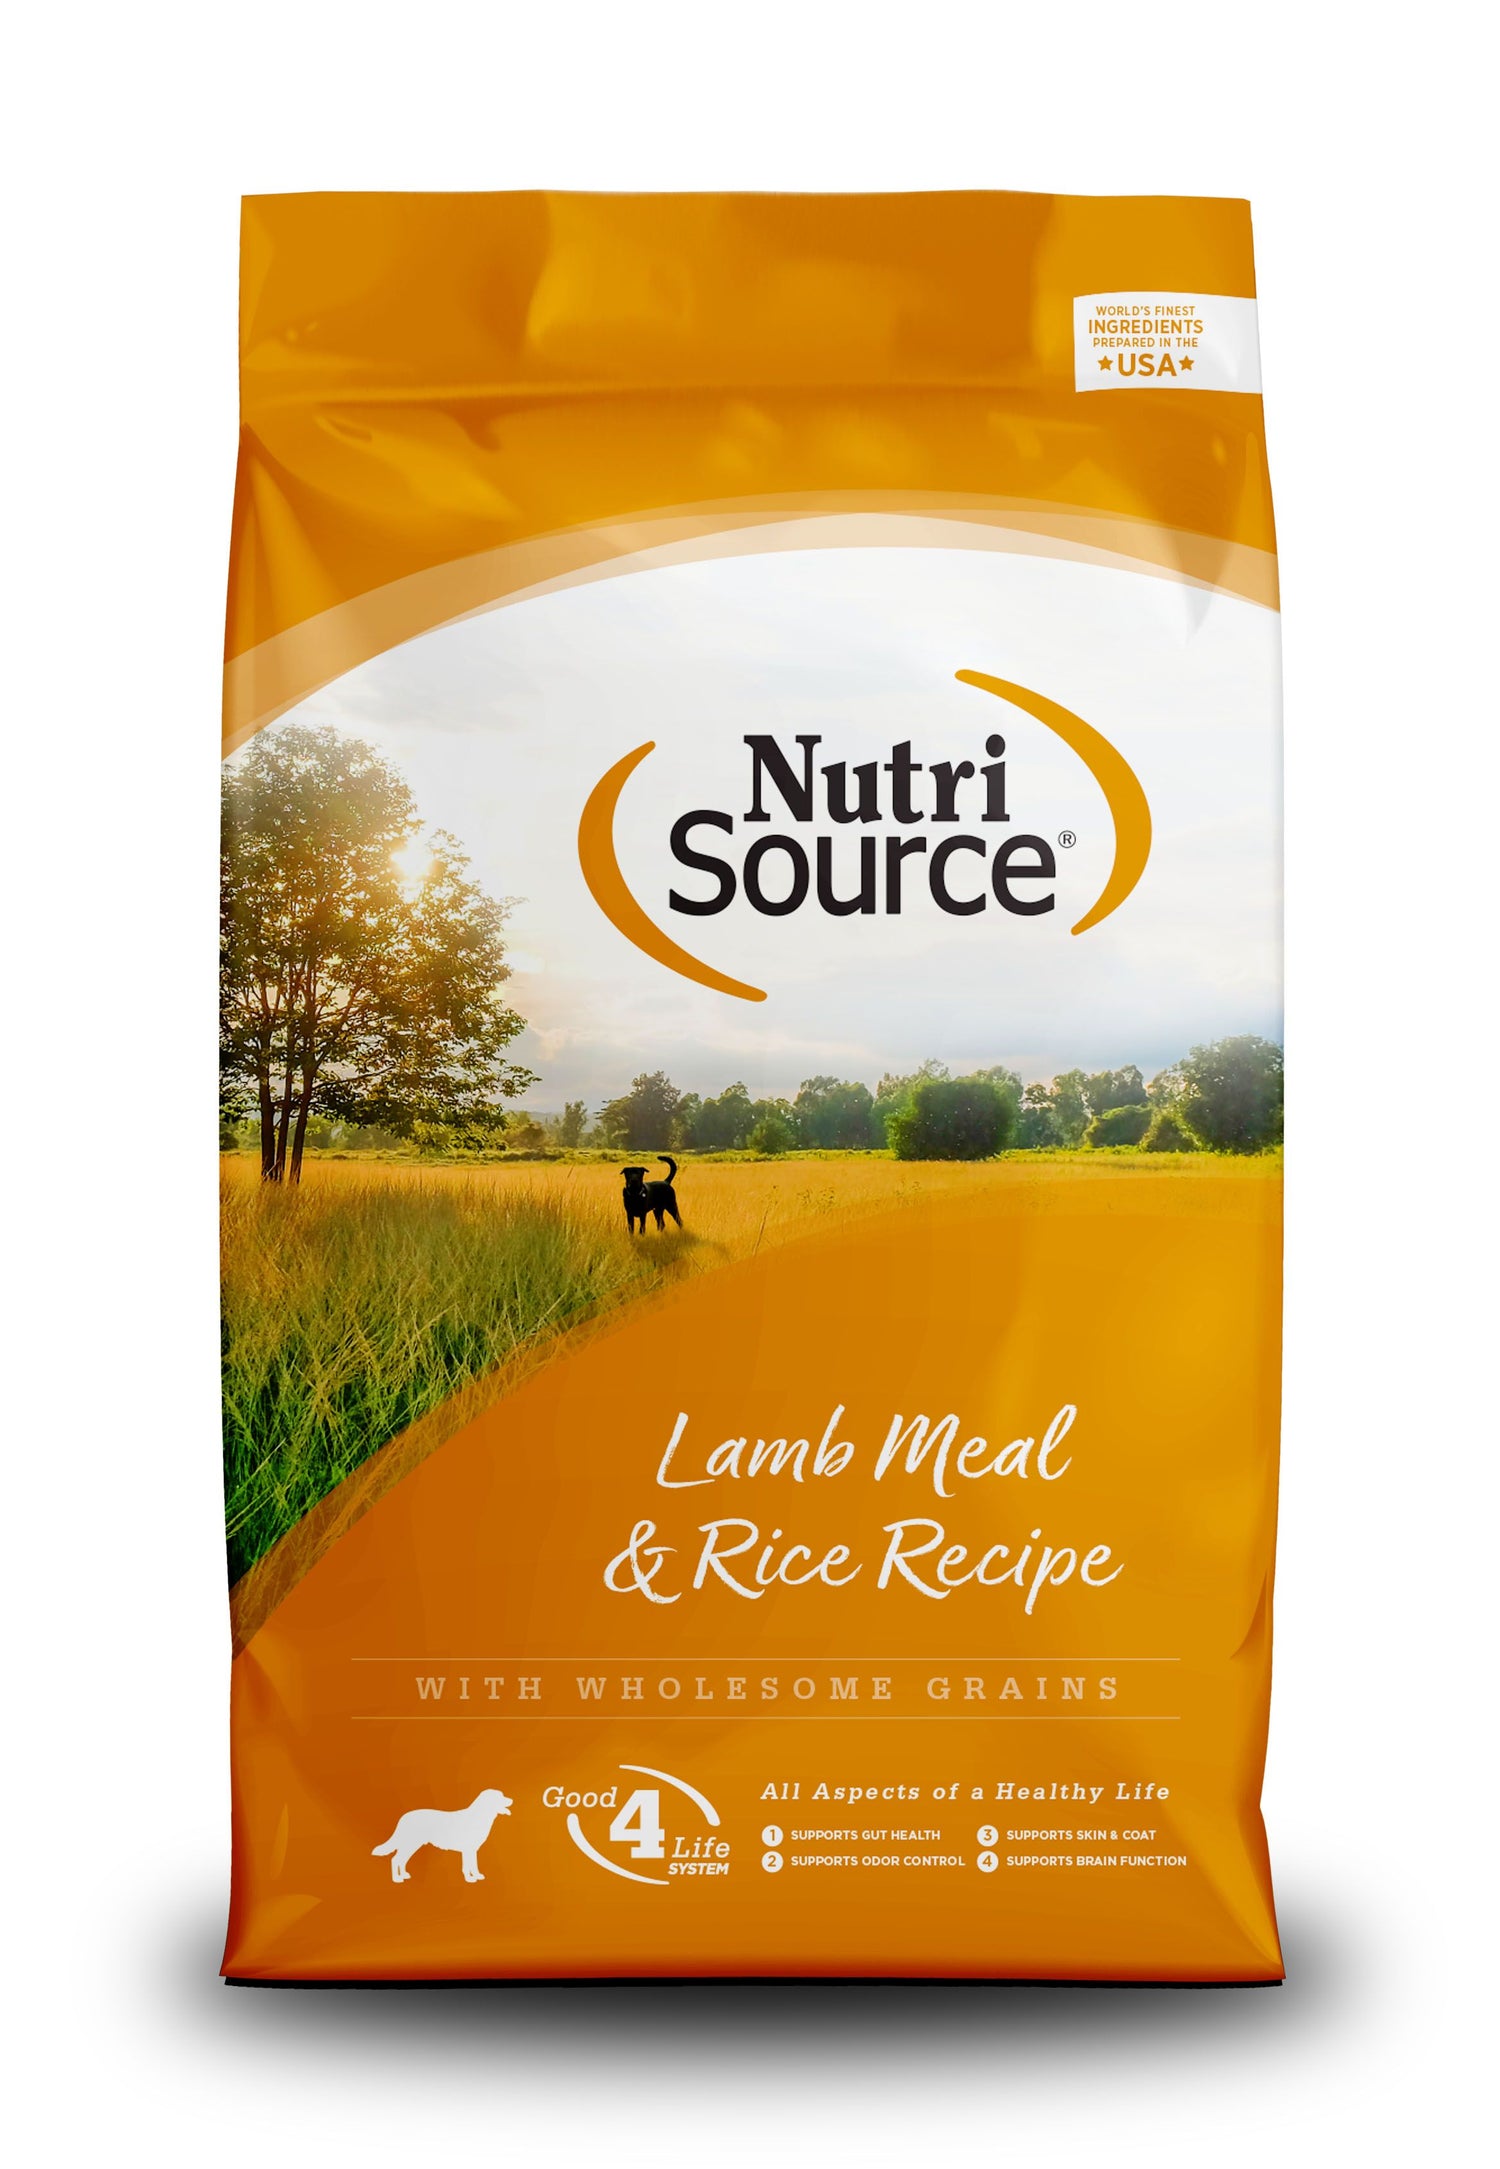 Brand: NutriSource